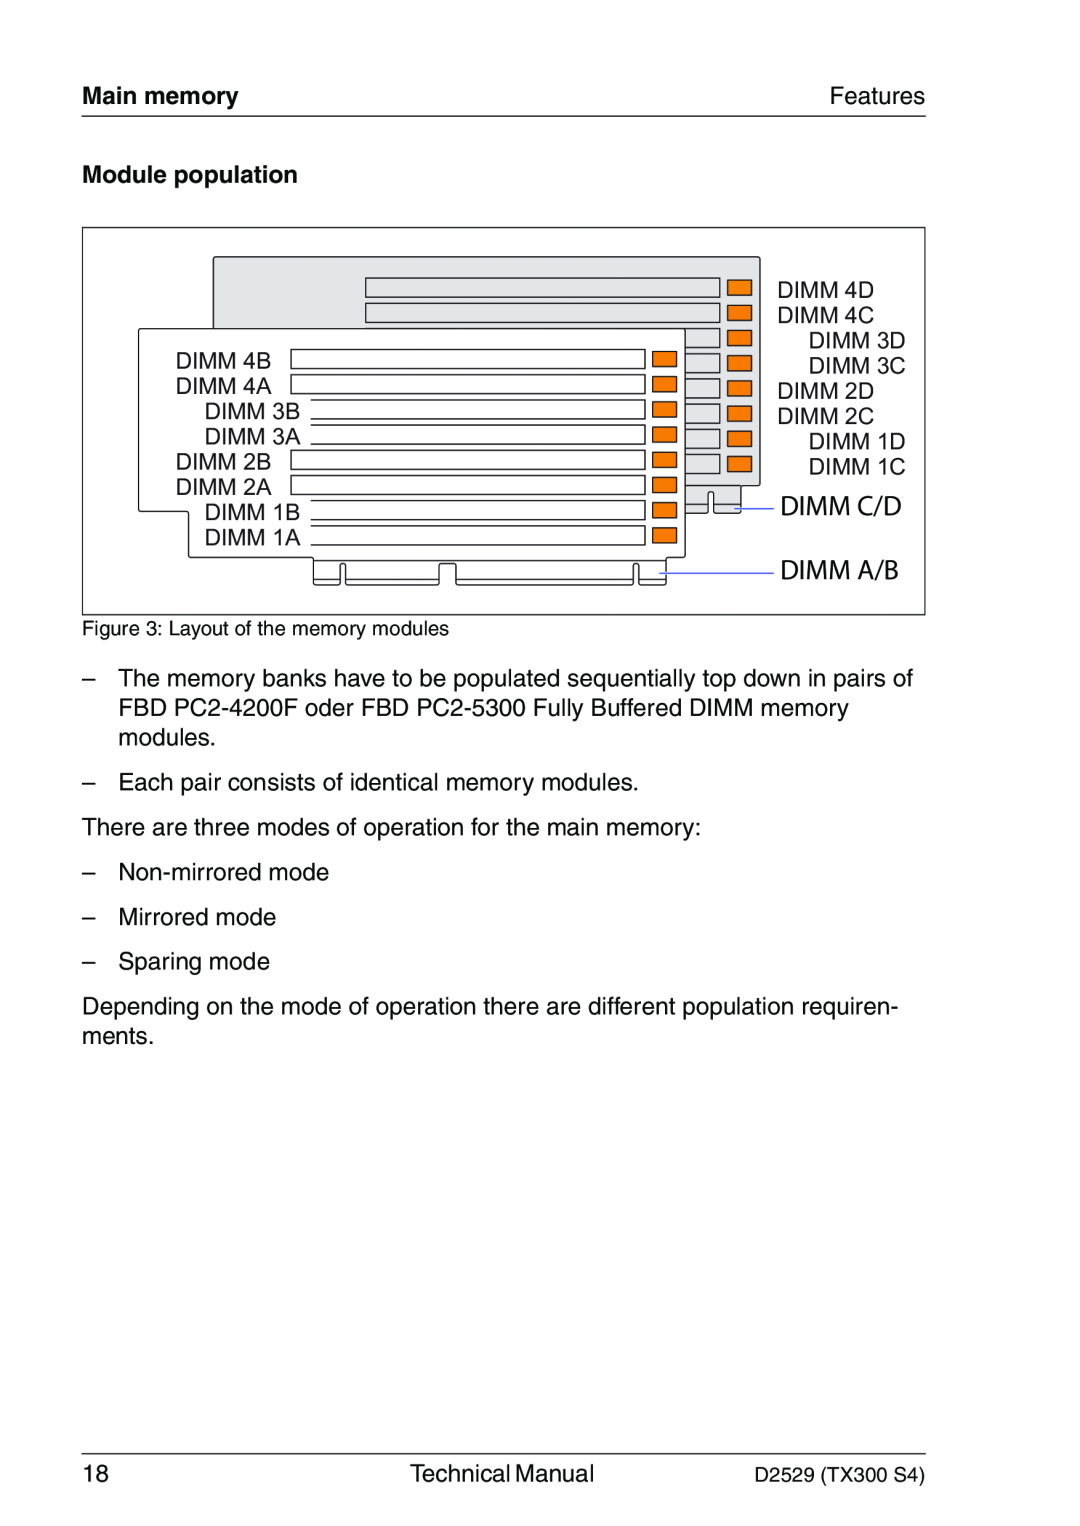 Fujitsu D2529 technical manual Module population, Dimm C/D, Dimm A/B, Main memory 